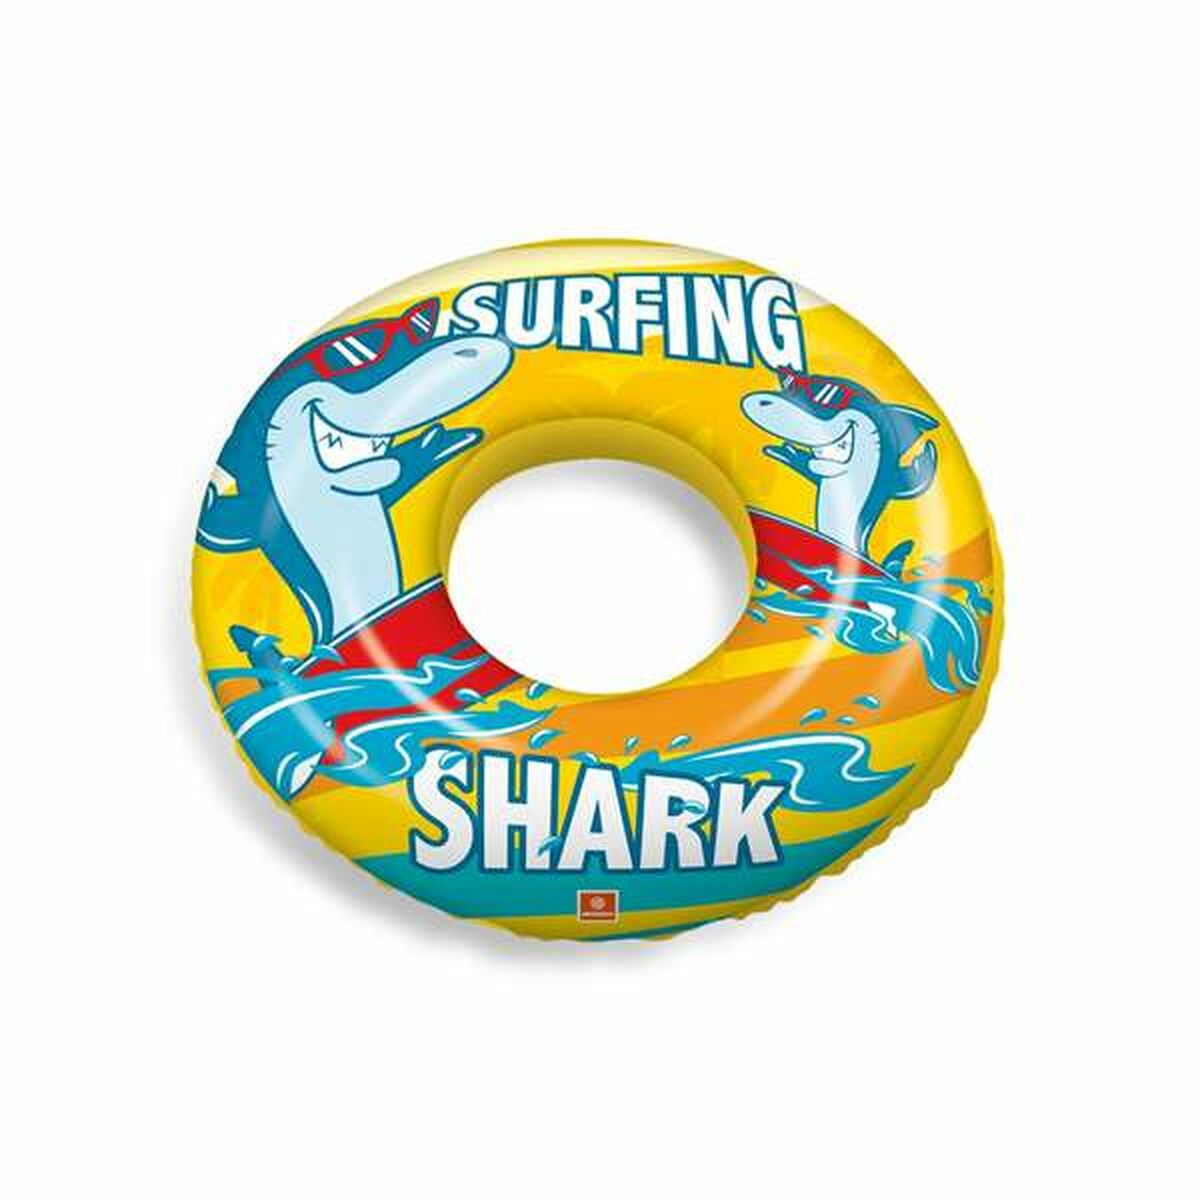 Manchettes Unice Toys Surfing Shark 50 cm Bouée